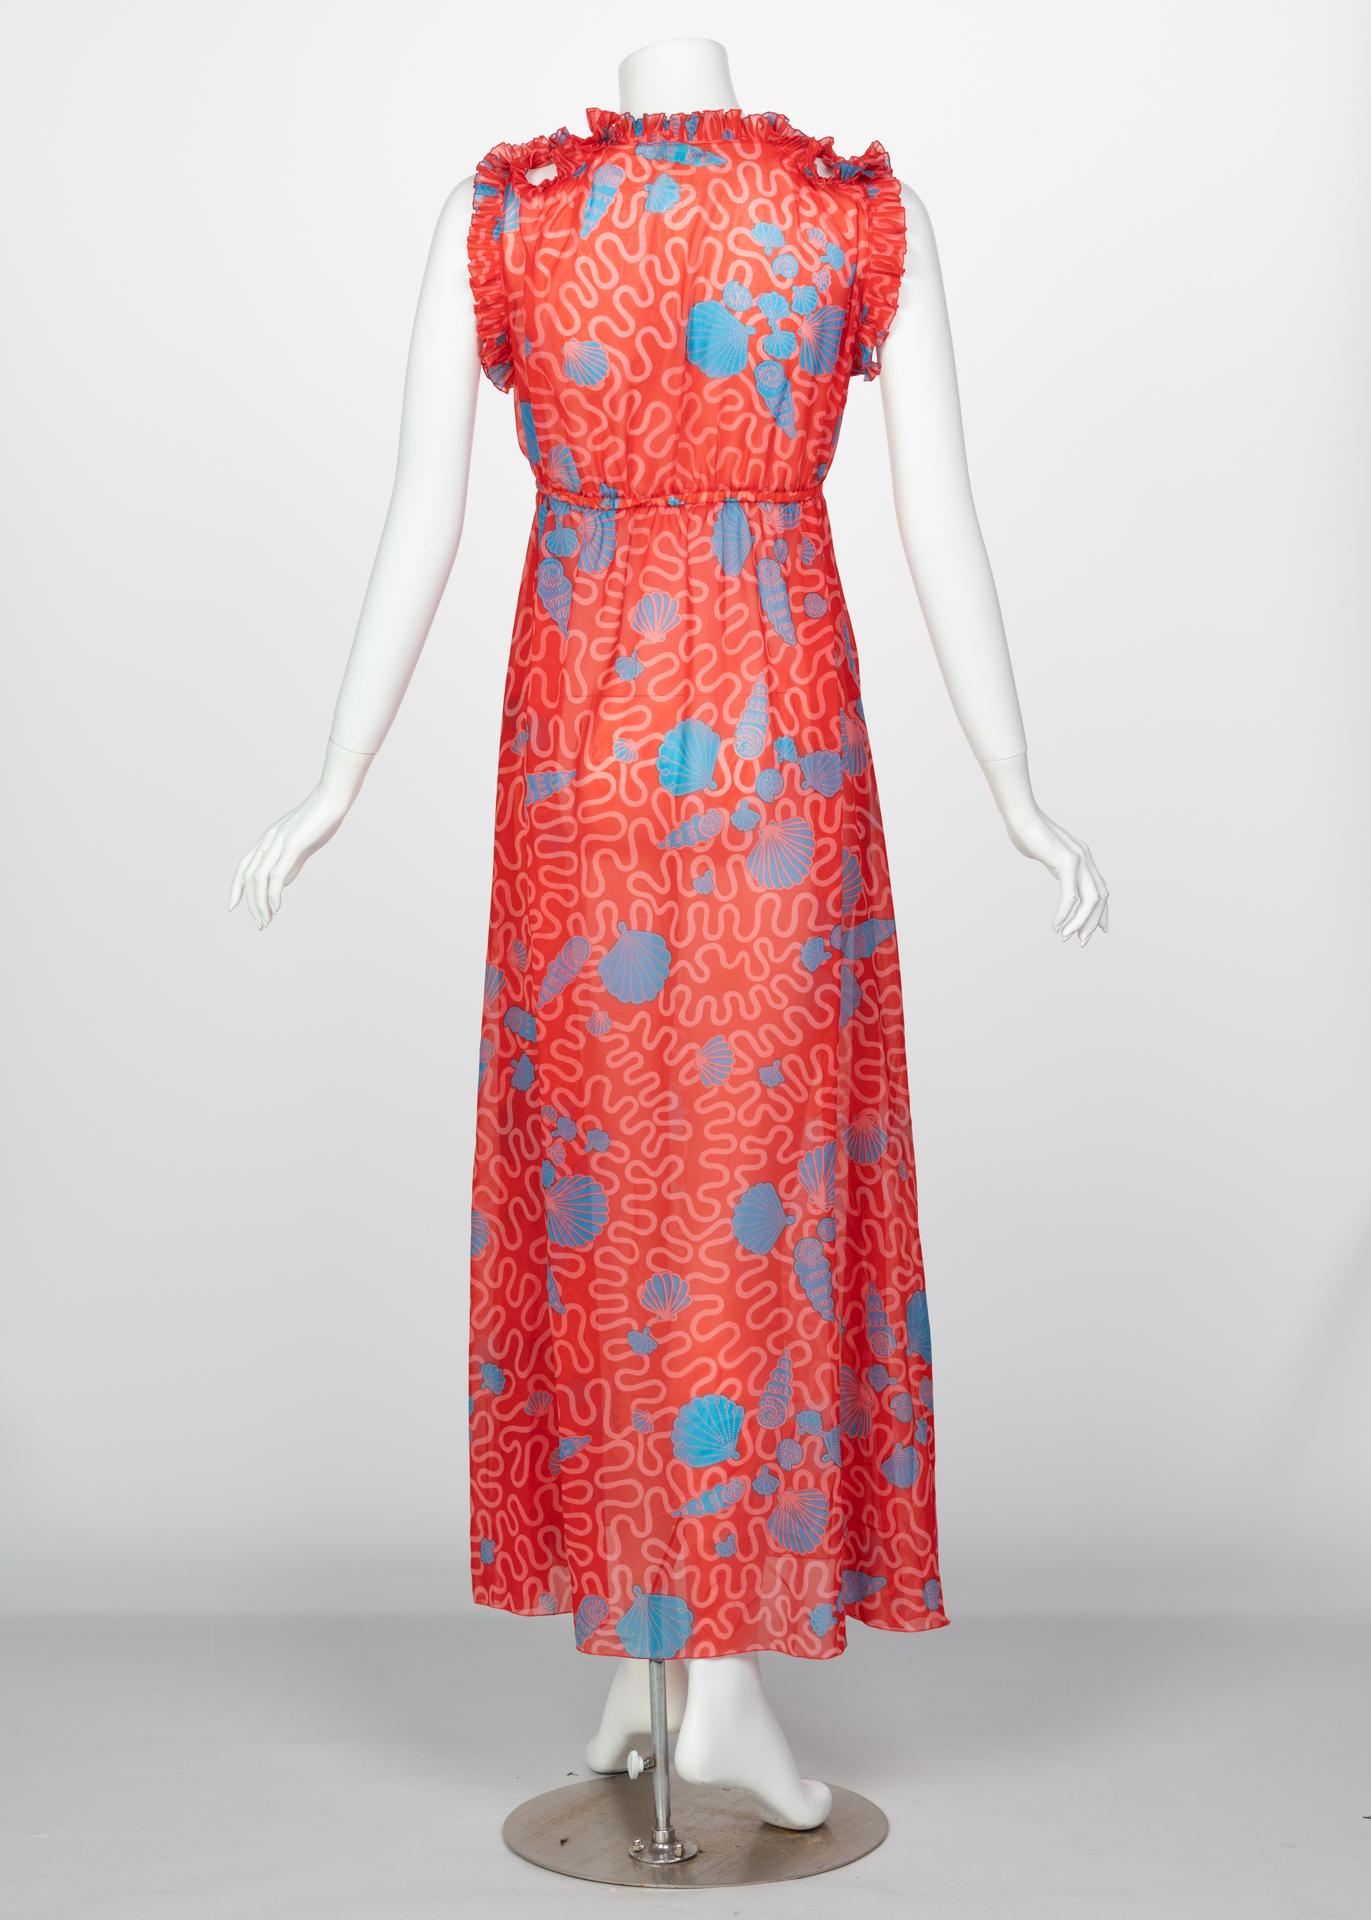 Zandra Rhodes Red Pleated Shell print Caftan and Sleeveless Dress Set, 1970s 6